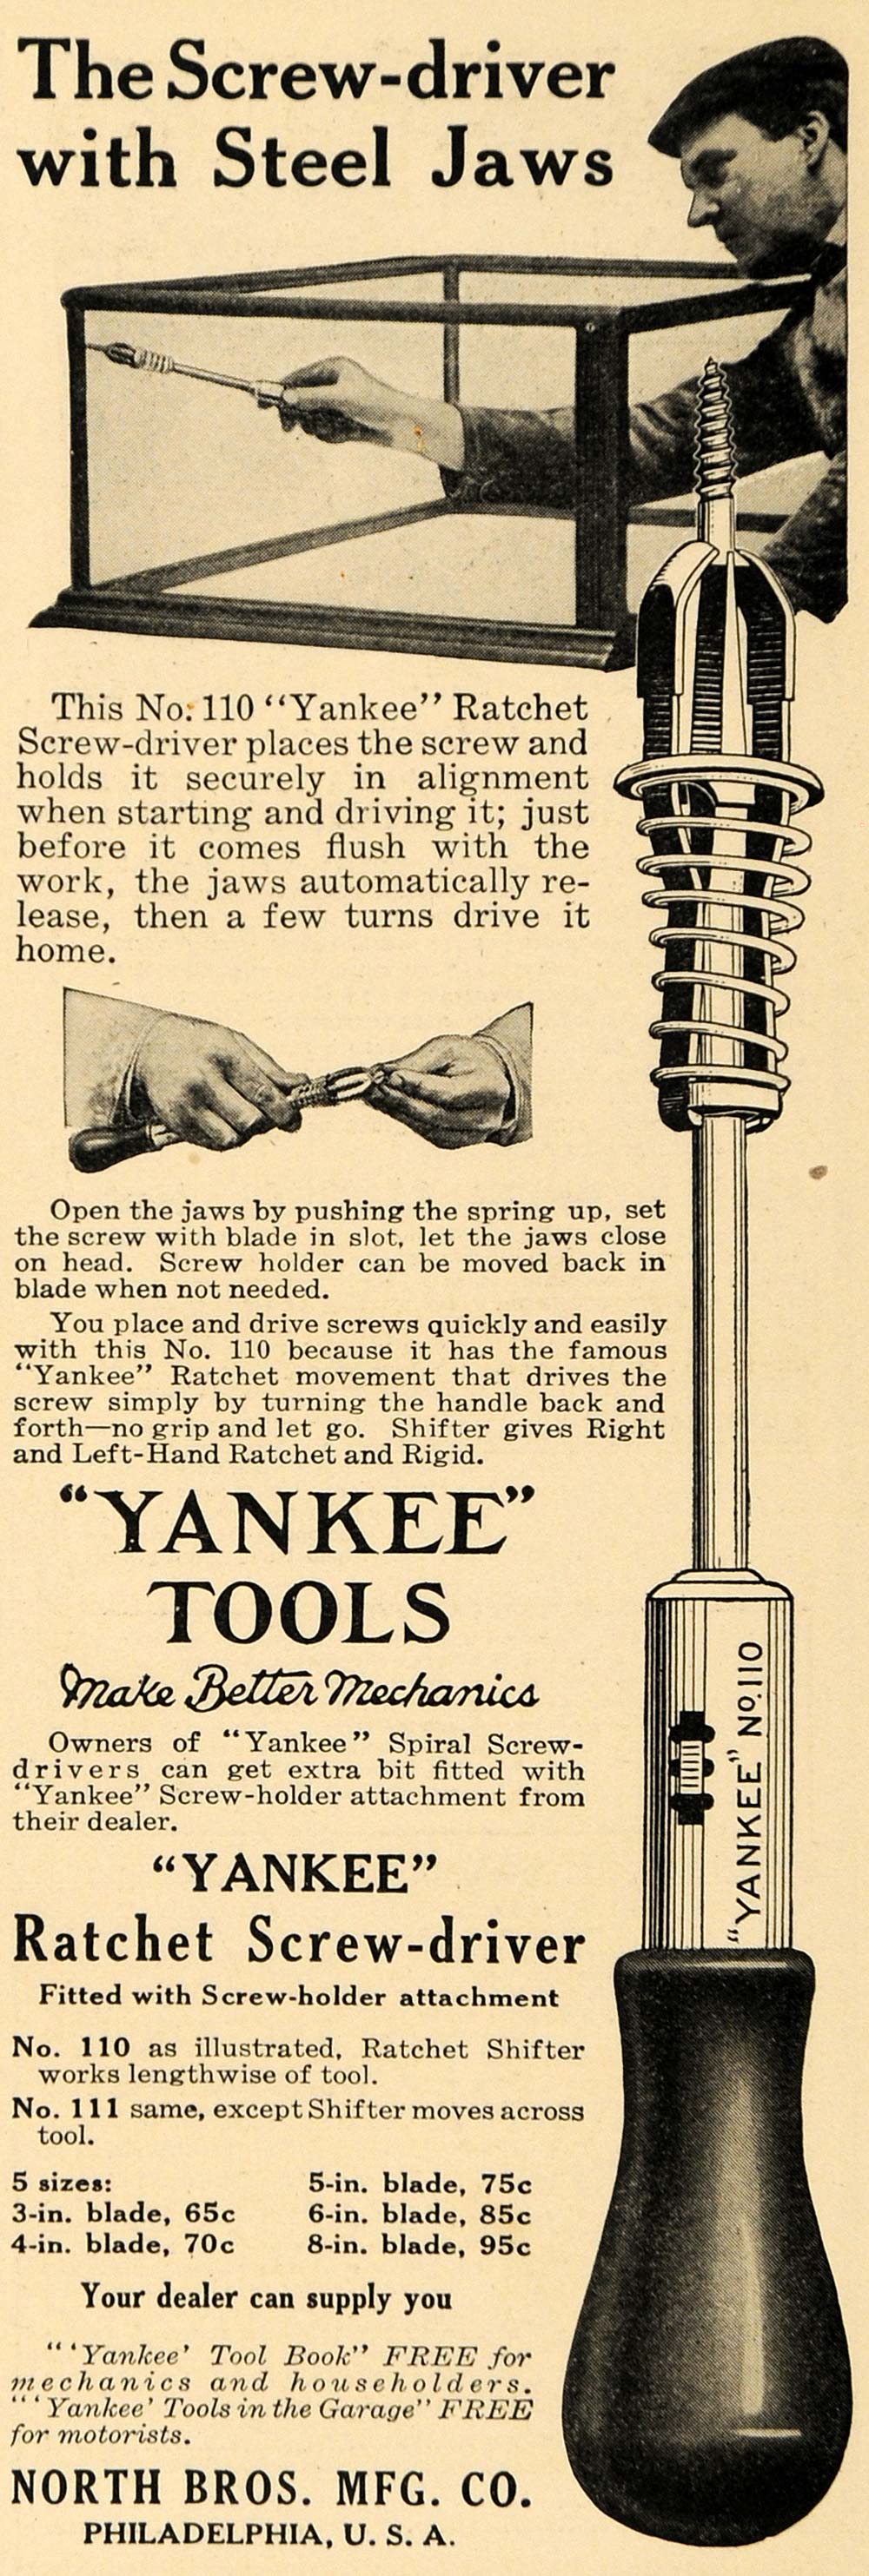 1915 Ad North Bros. Yankee Ratchet Screwdriver Tool - ORIGINAL ADVERTISING TW1